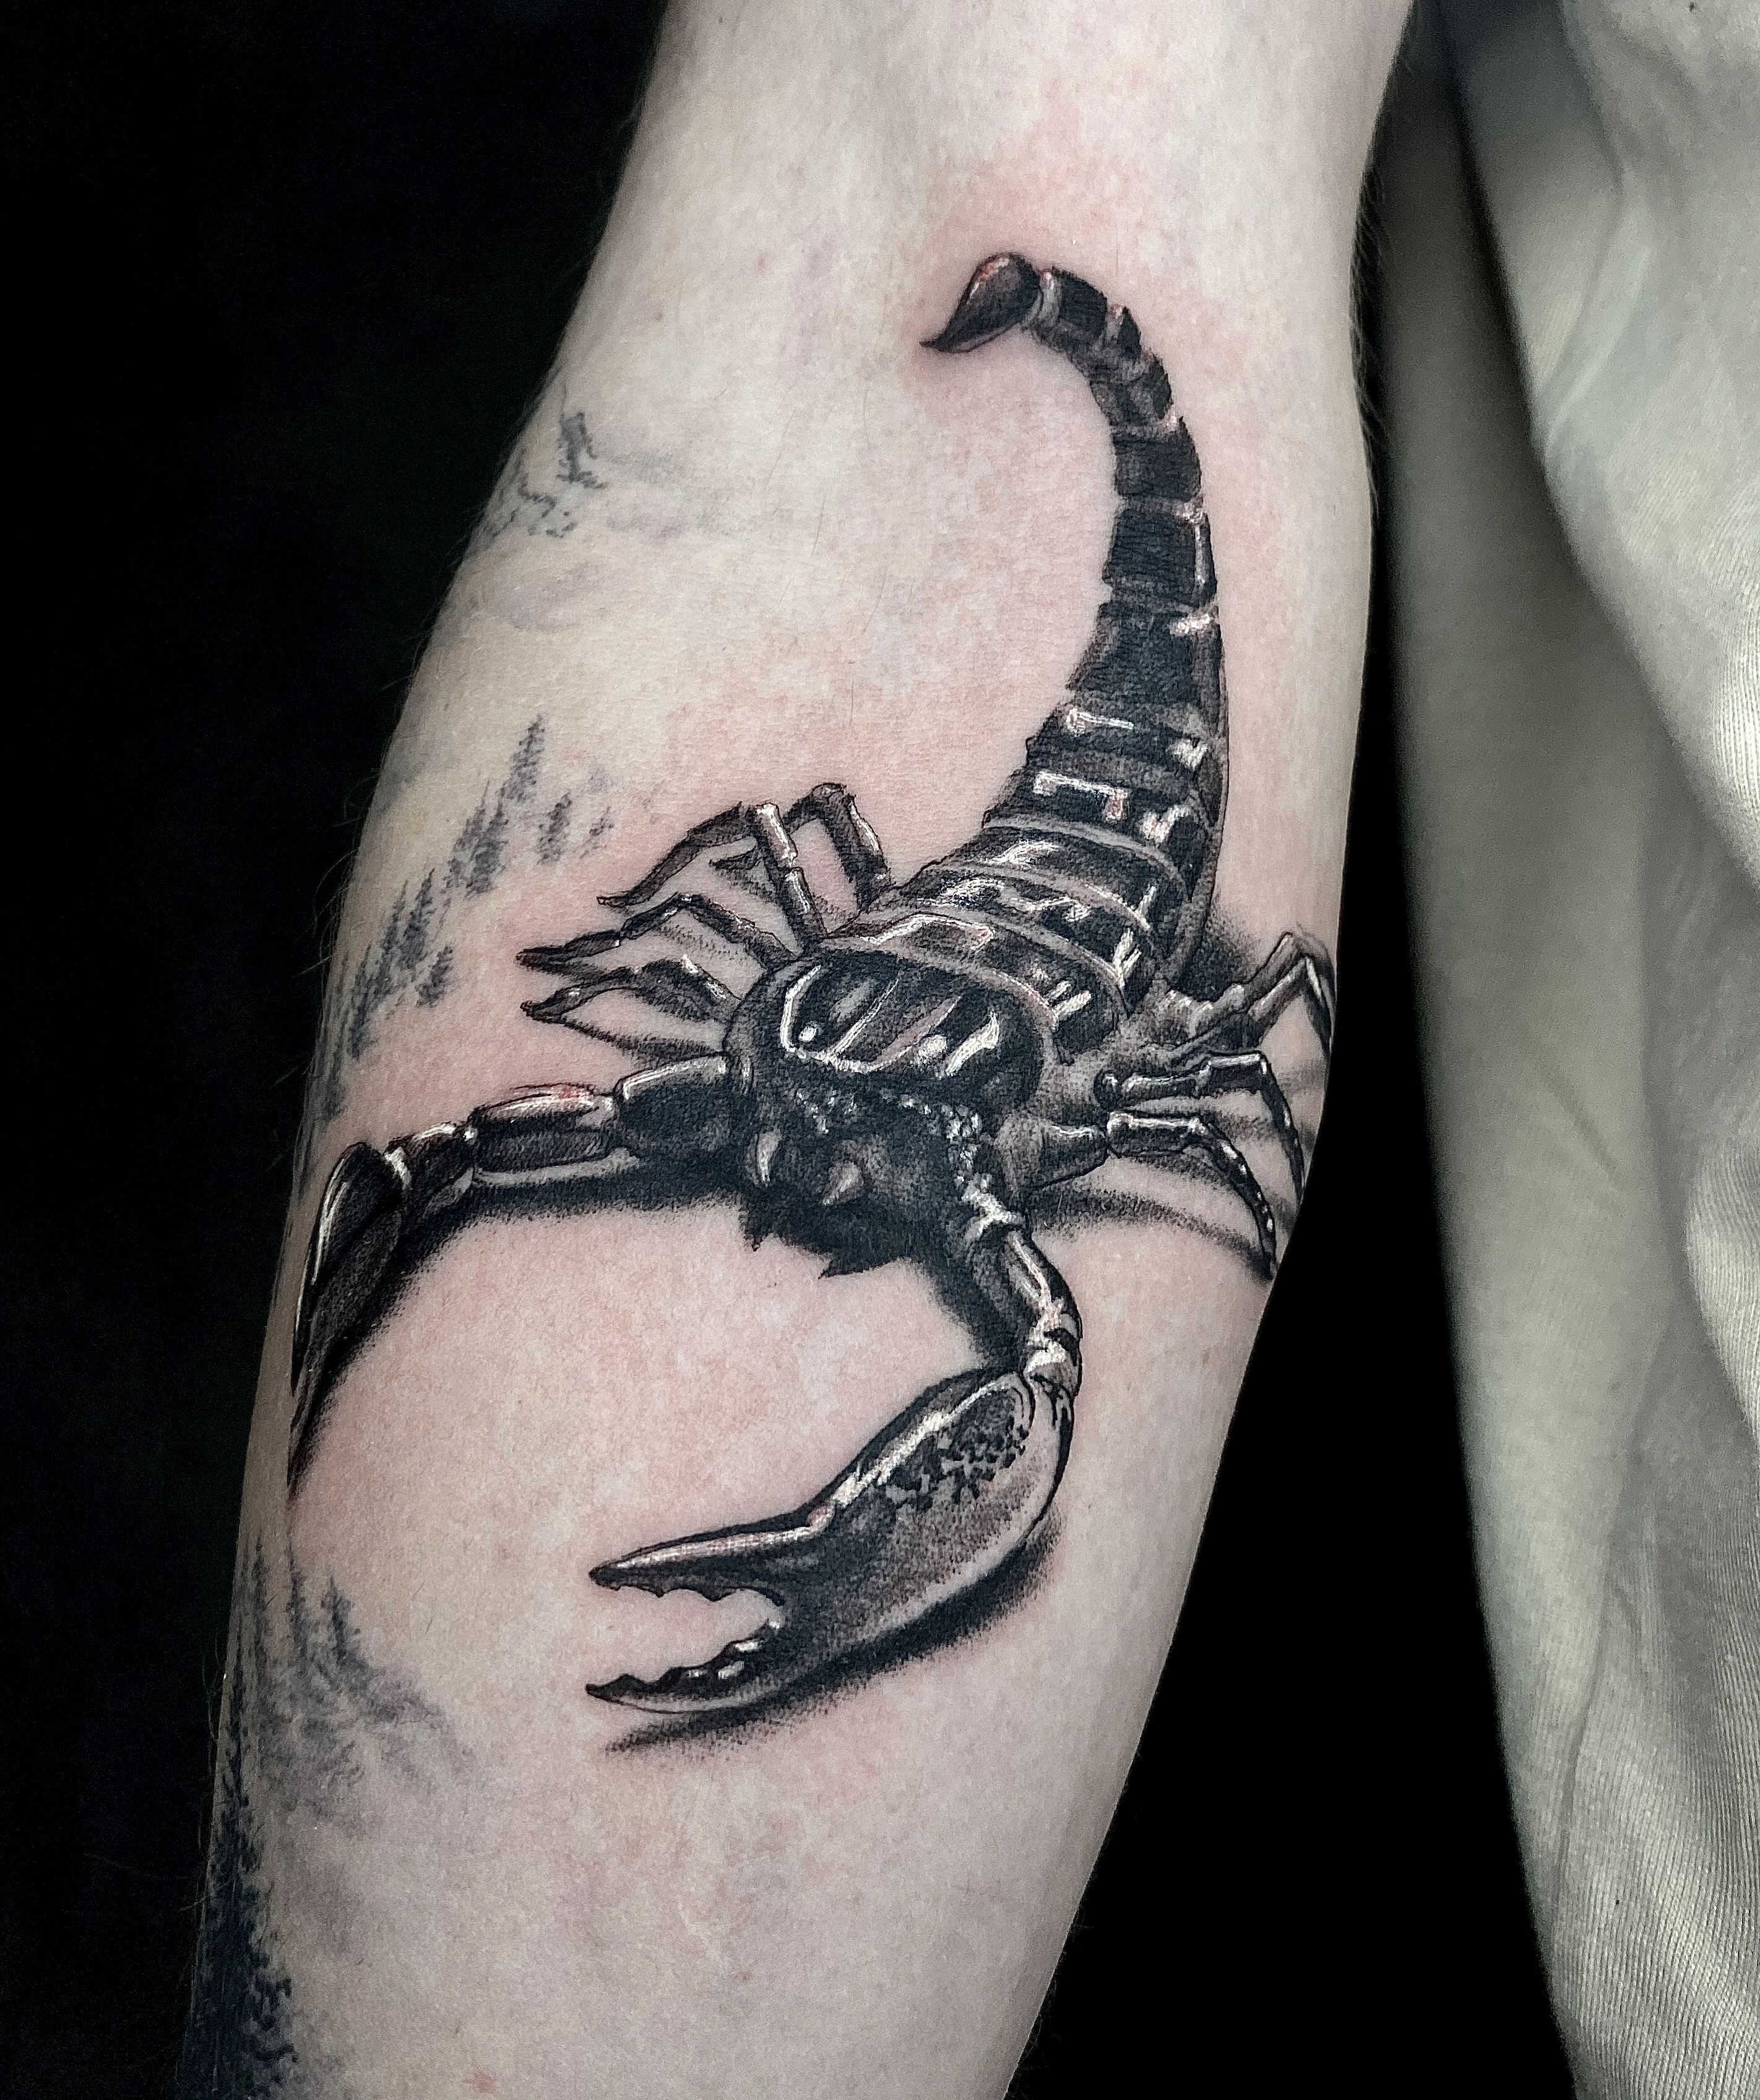 My scorpion tattoo by Bronto-Stingtail on DeviantArt